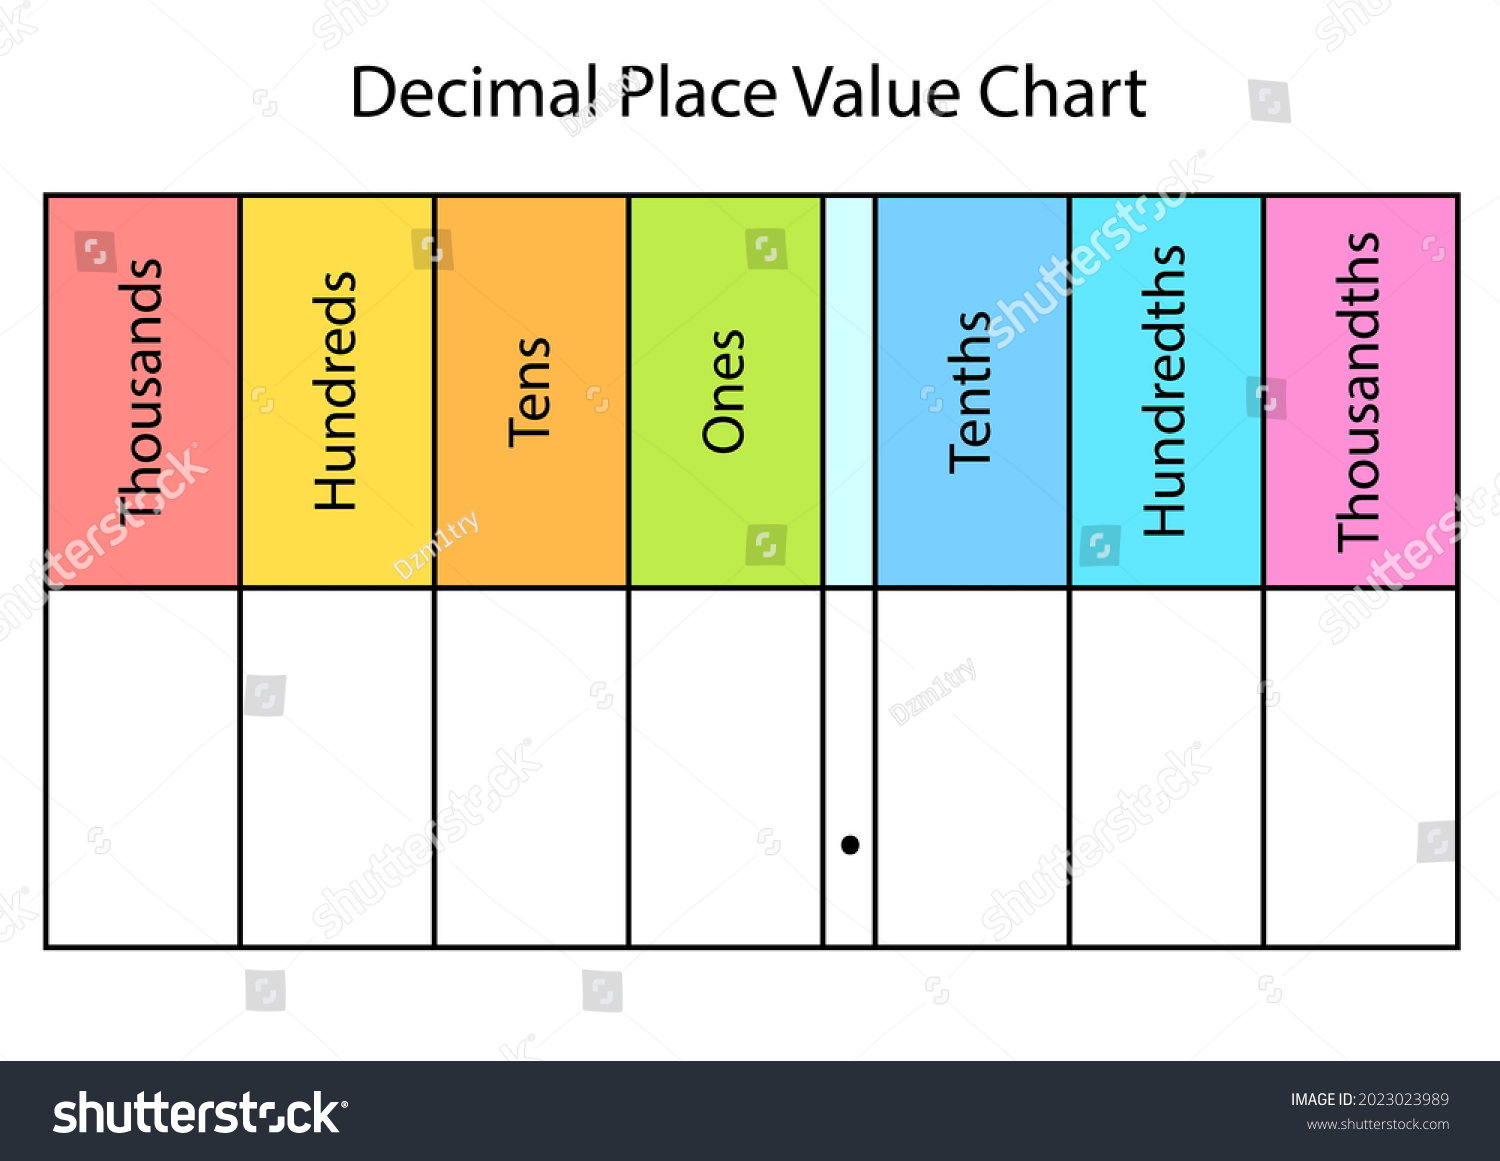 decimal-place-value-chart-blank-template-vector-c-s-n-mi-n-ph-b-n